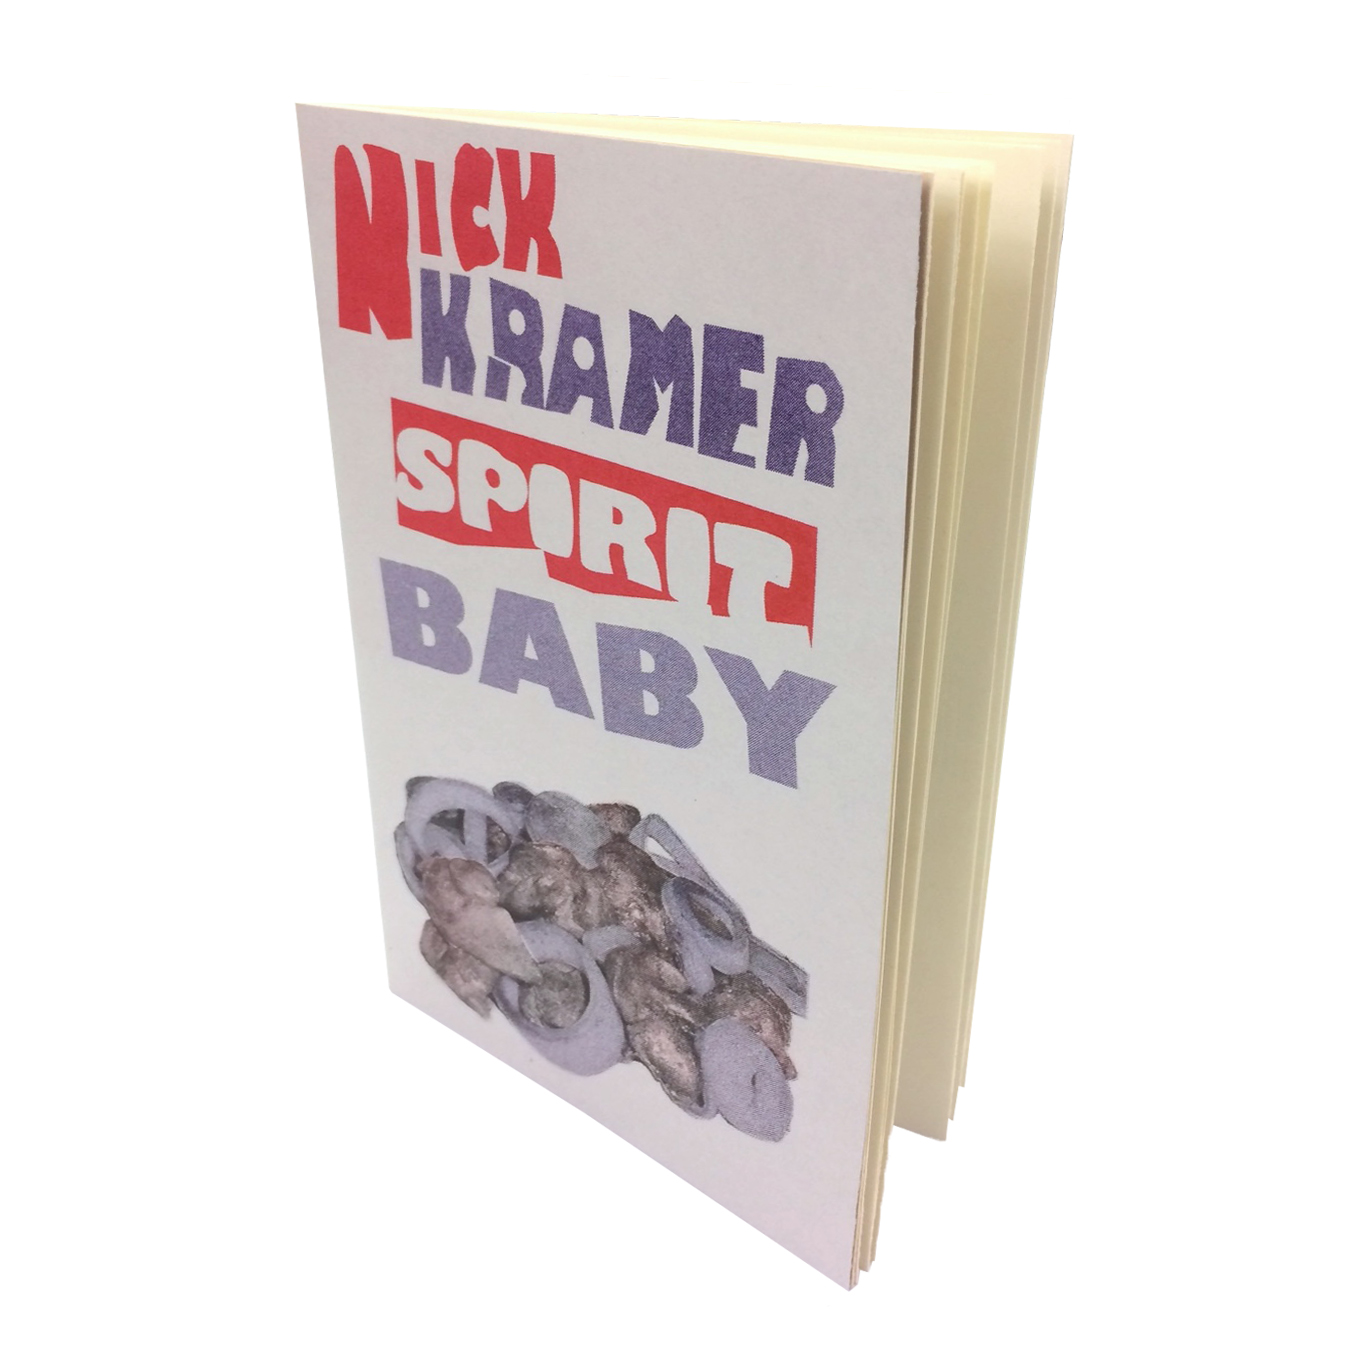 spirit babies book